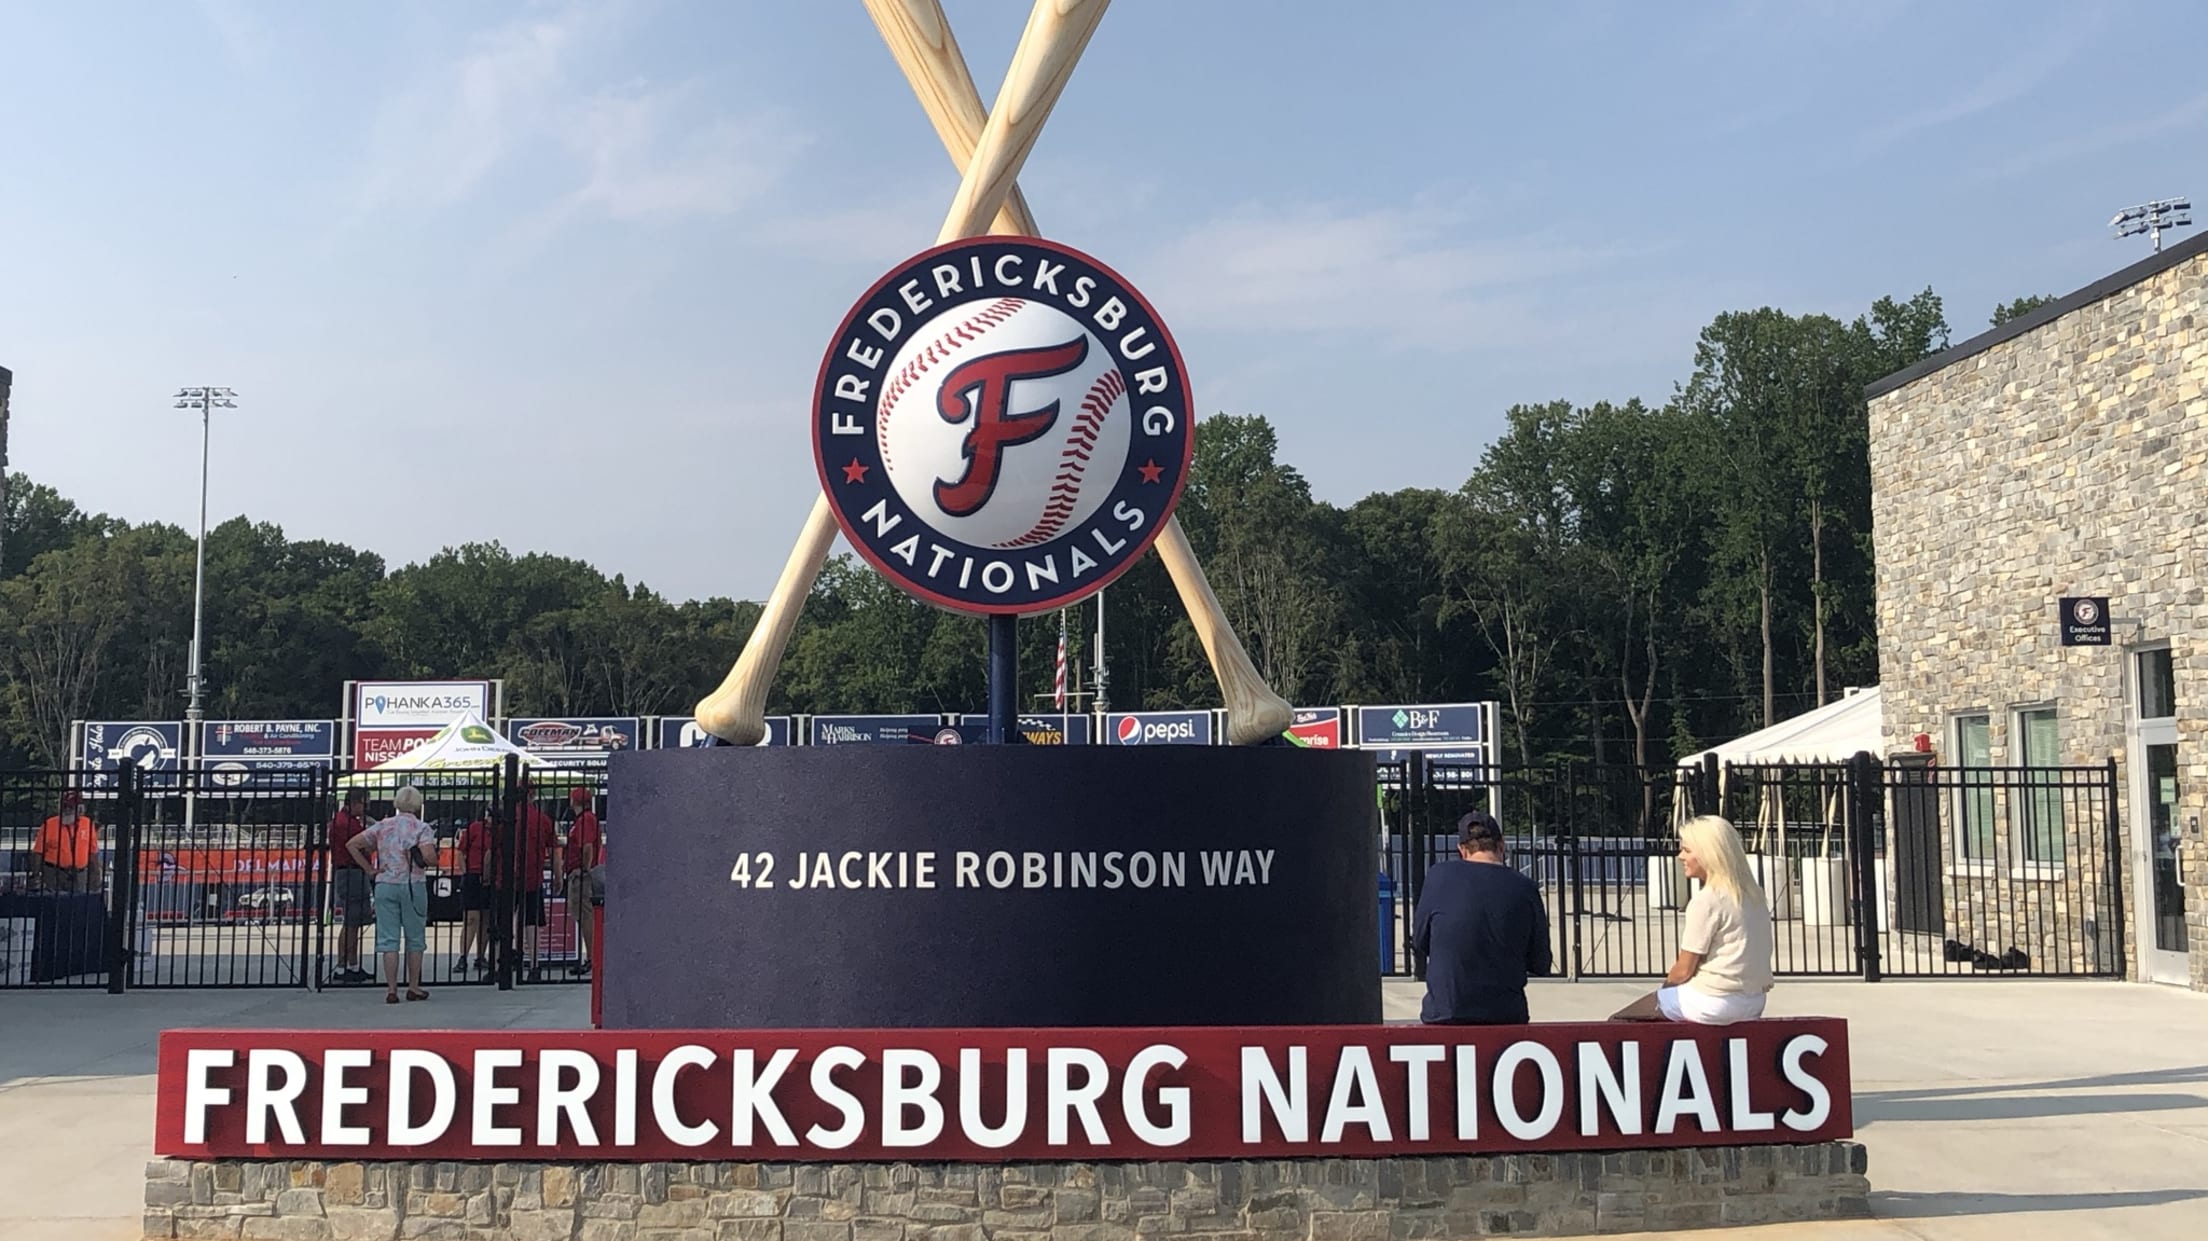 Visit FredNats Ballpark home of the Fredericksburg Nationals